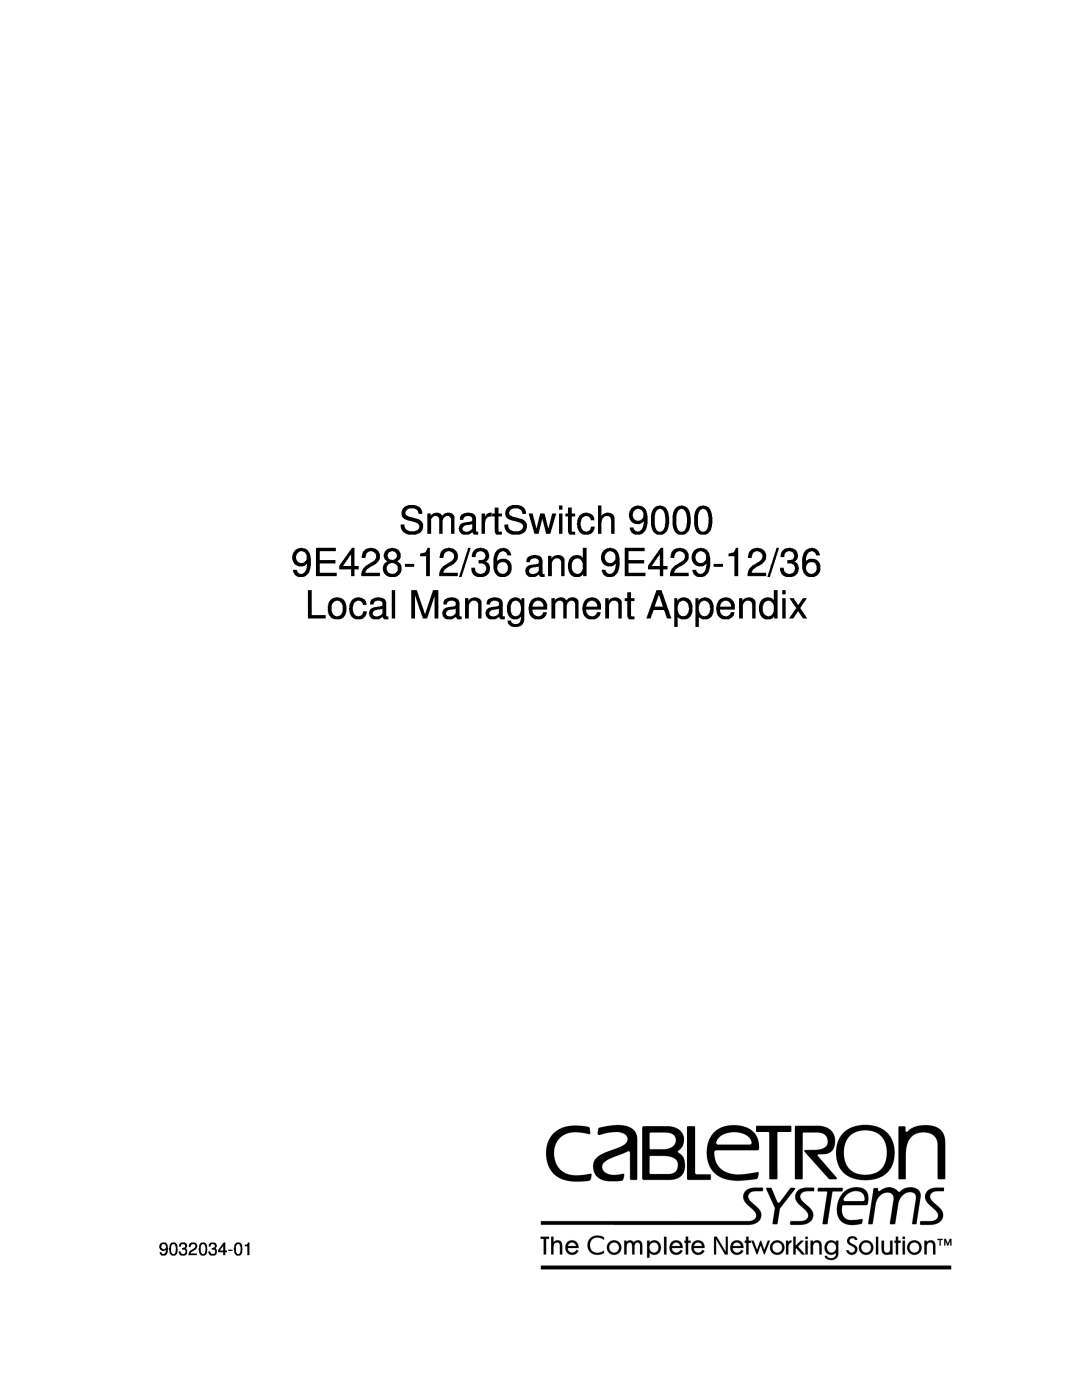 Cabletron Systems 9E428-36 appendix SmartSwitch 9E428-12/36 and 9E429-12/36 Local Management Appendix, 9032034-01 